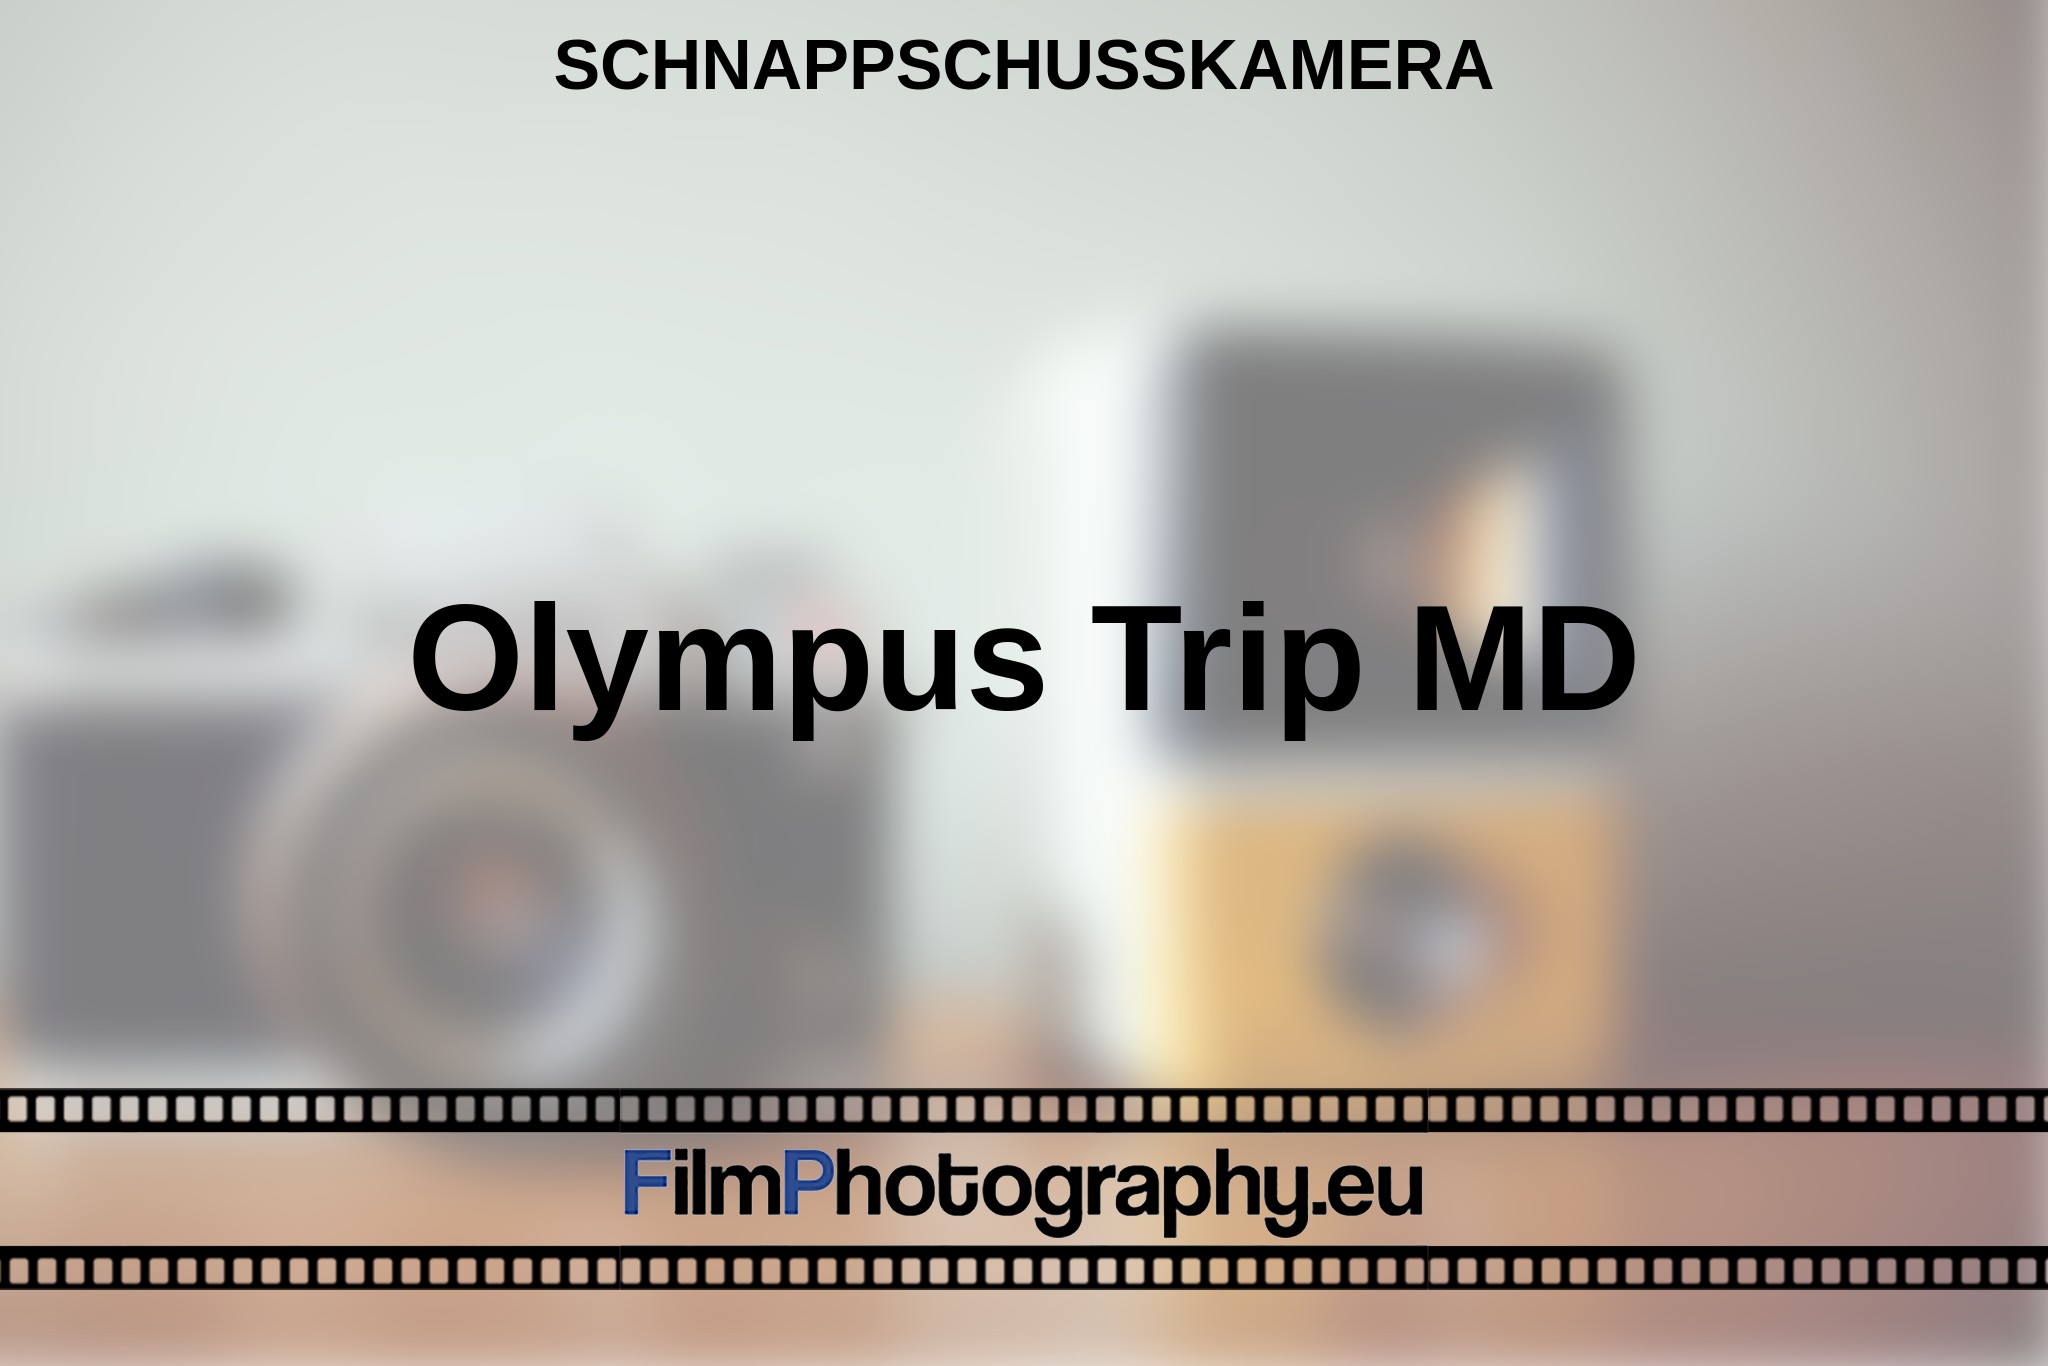 olympus-trip-md-schnappschusskamera-bnv.jpg